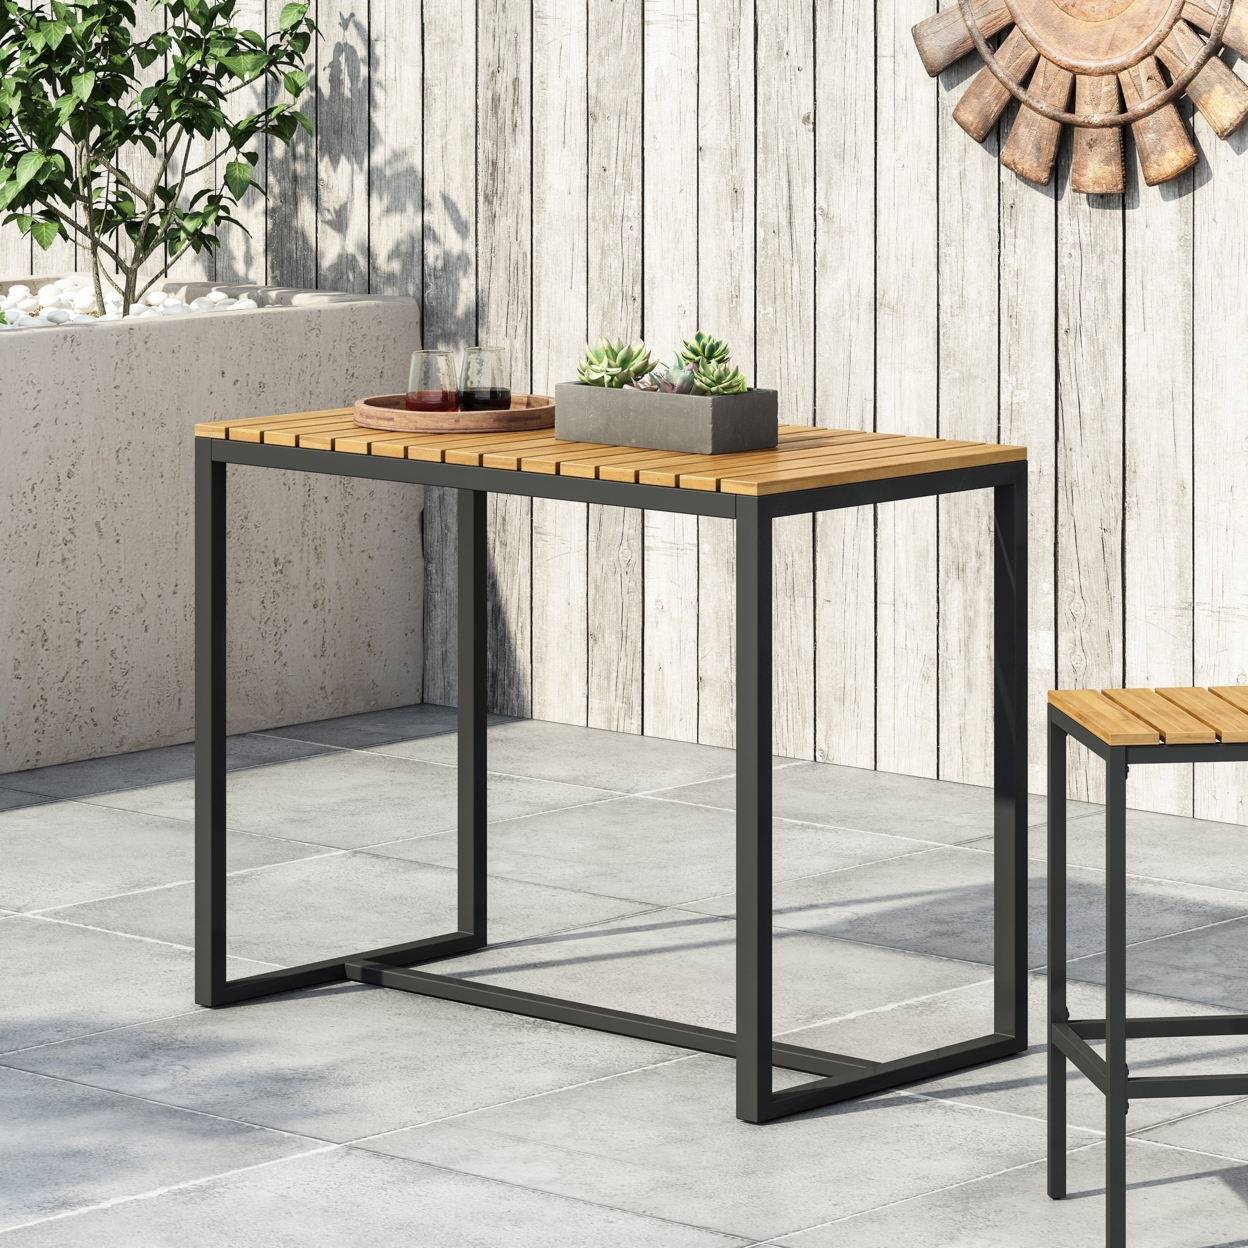 Arath Outdoor Modern Industrial Acacia Wood Bar Table - Black/teak